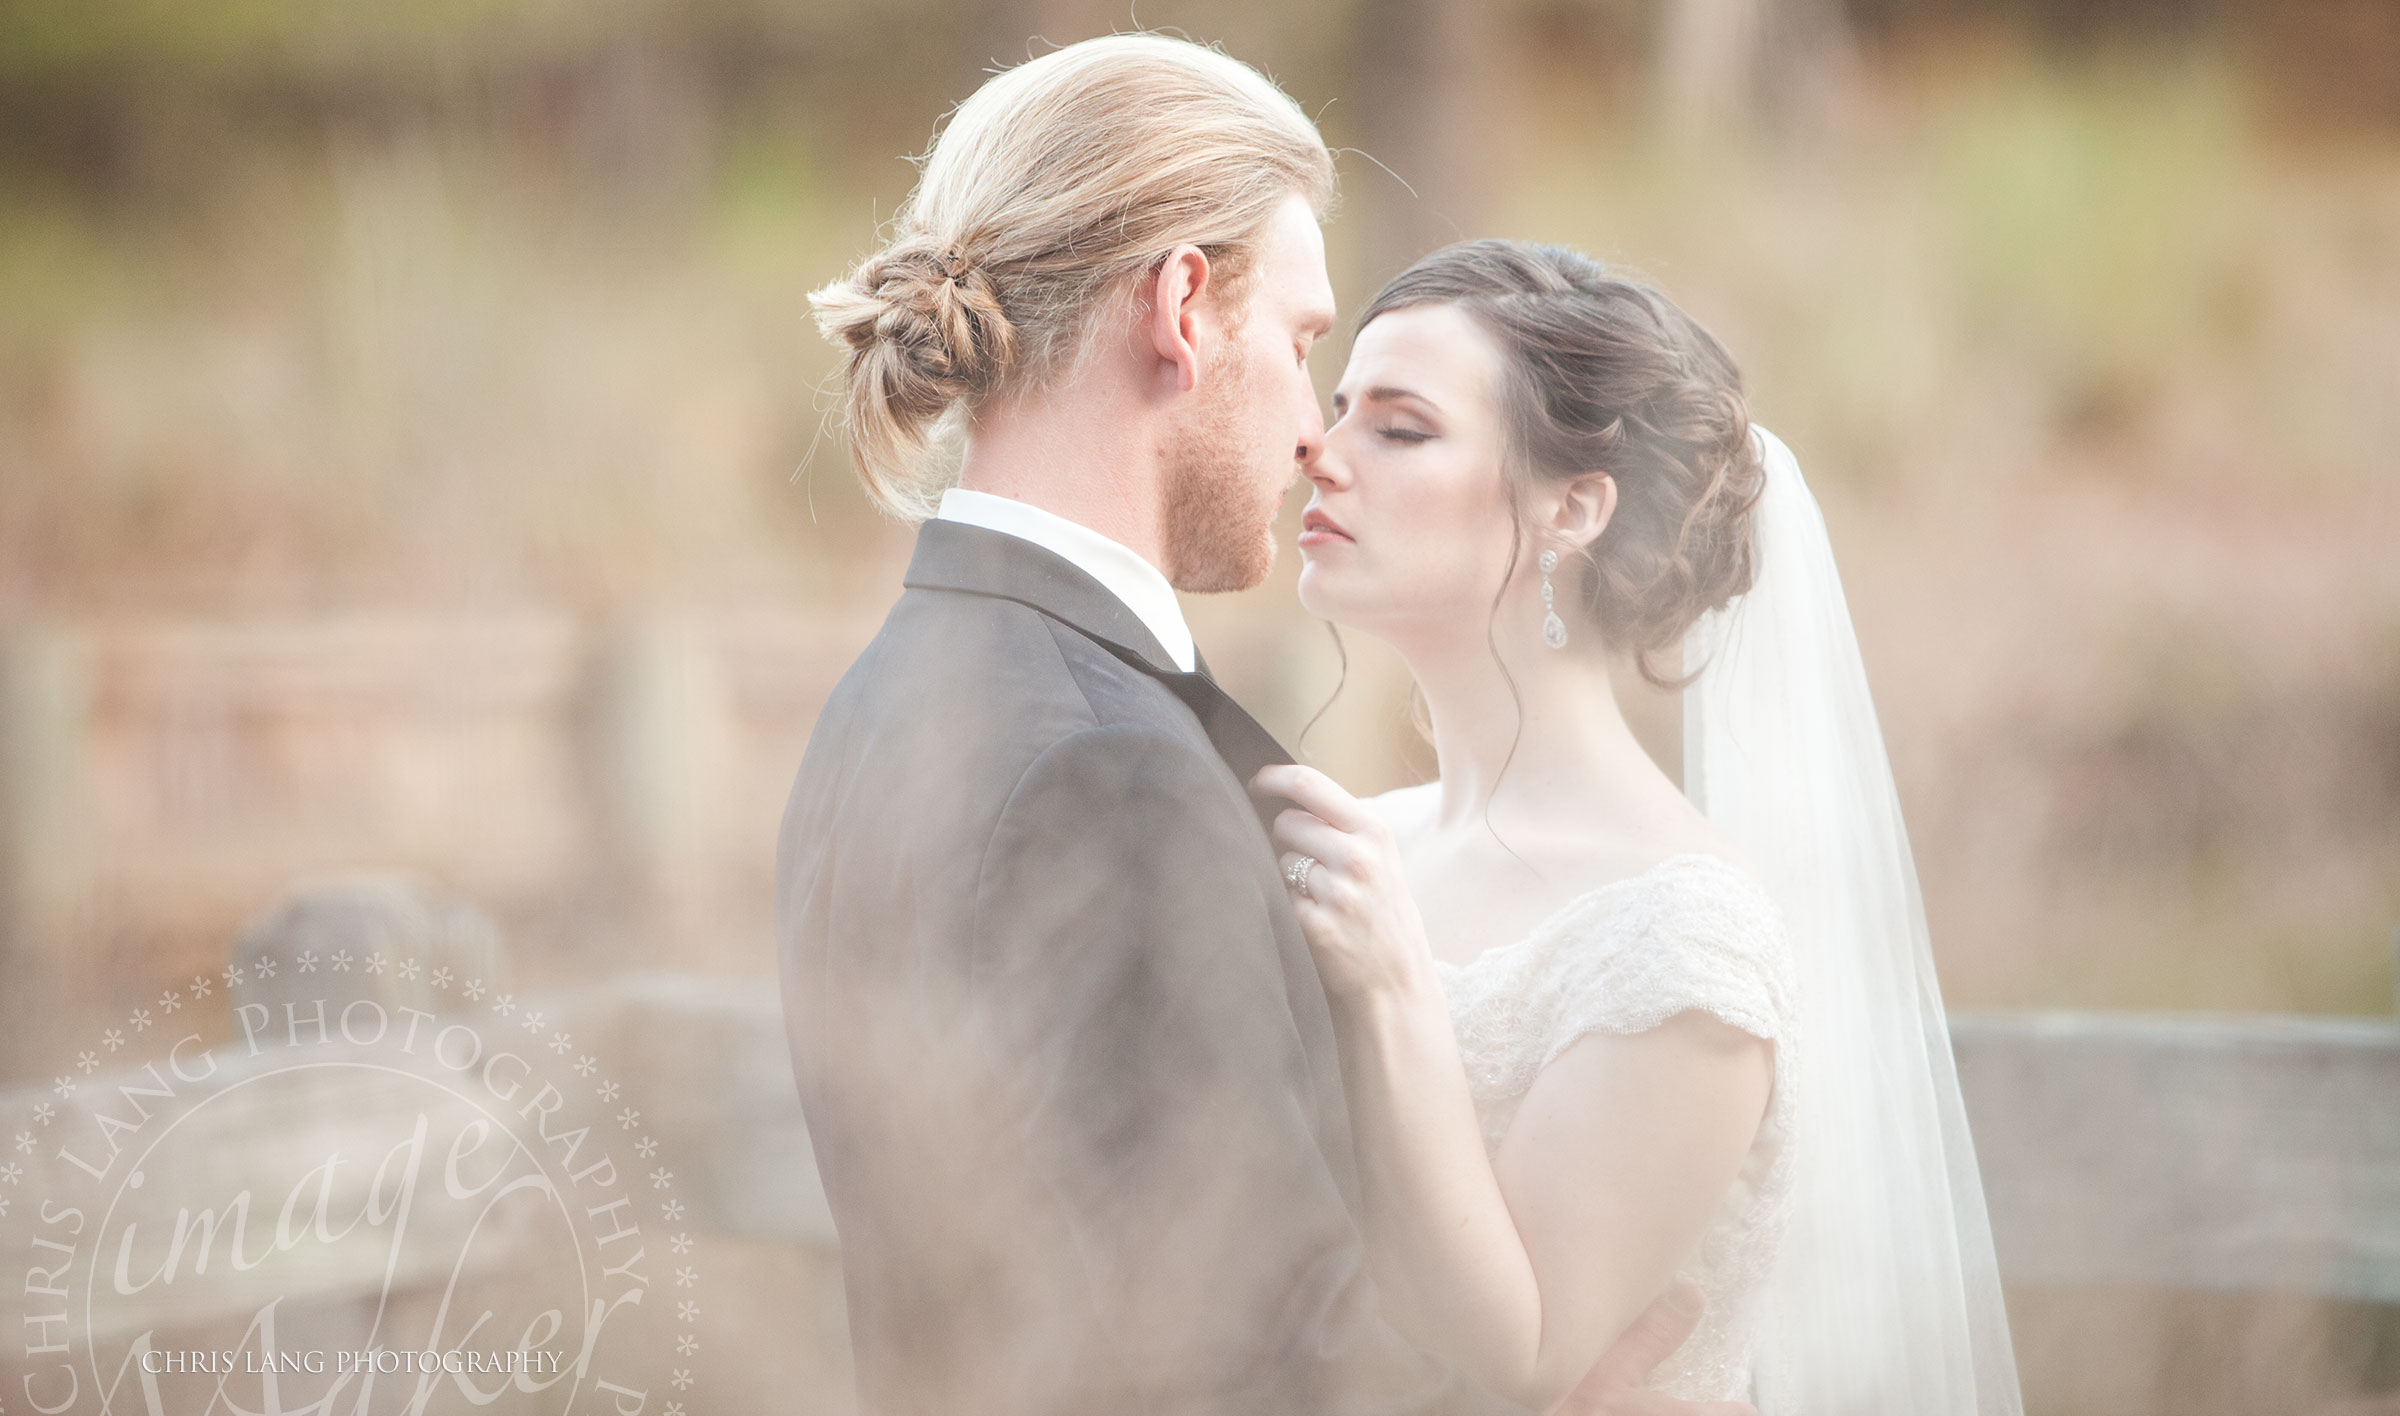 Wilmington NC Wedding Photography- Bride & Groom - Wedding Picture Ideas - Wedding Styles & Trends - Wilmington NC Wedding Photographers 